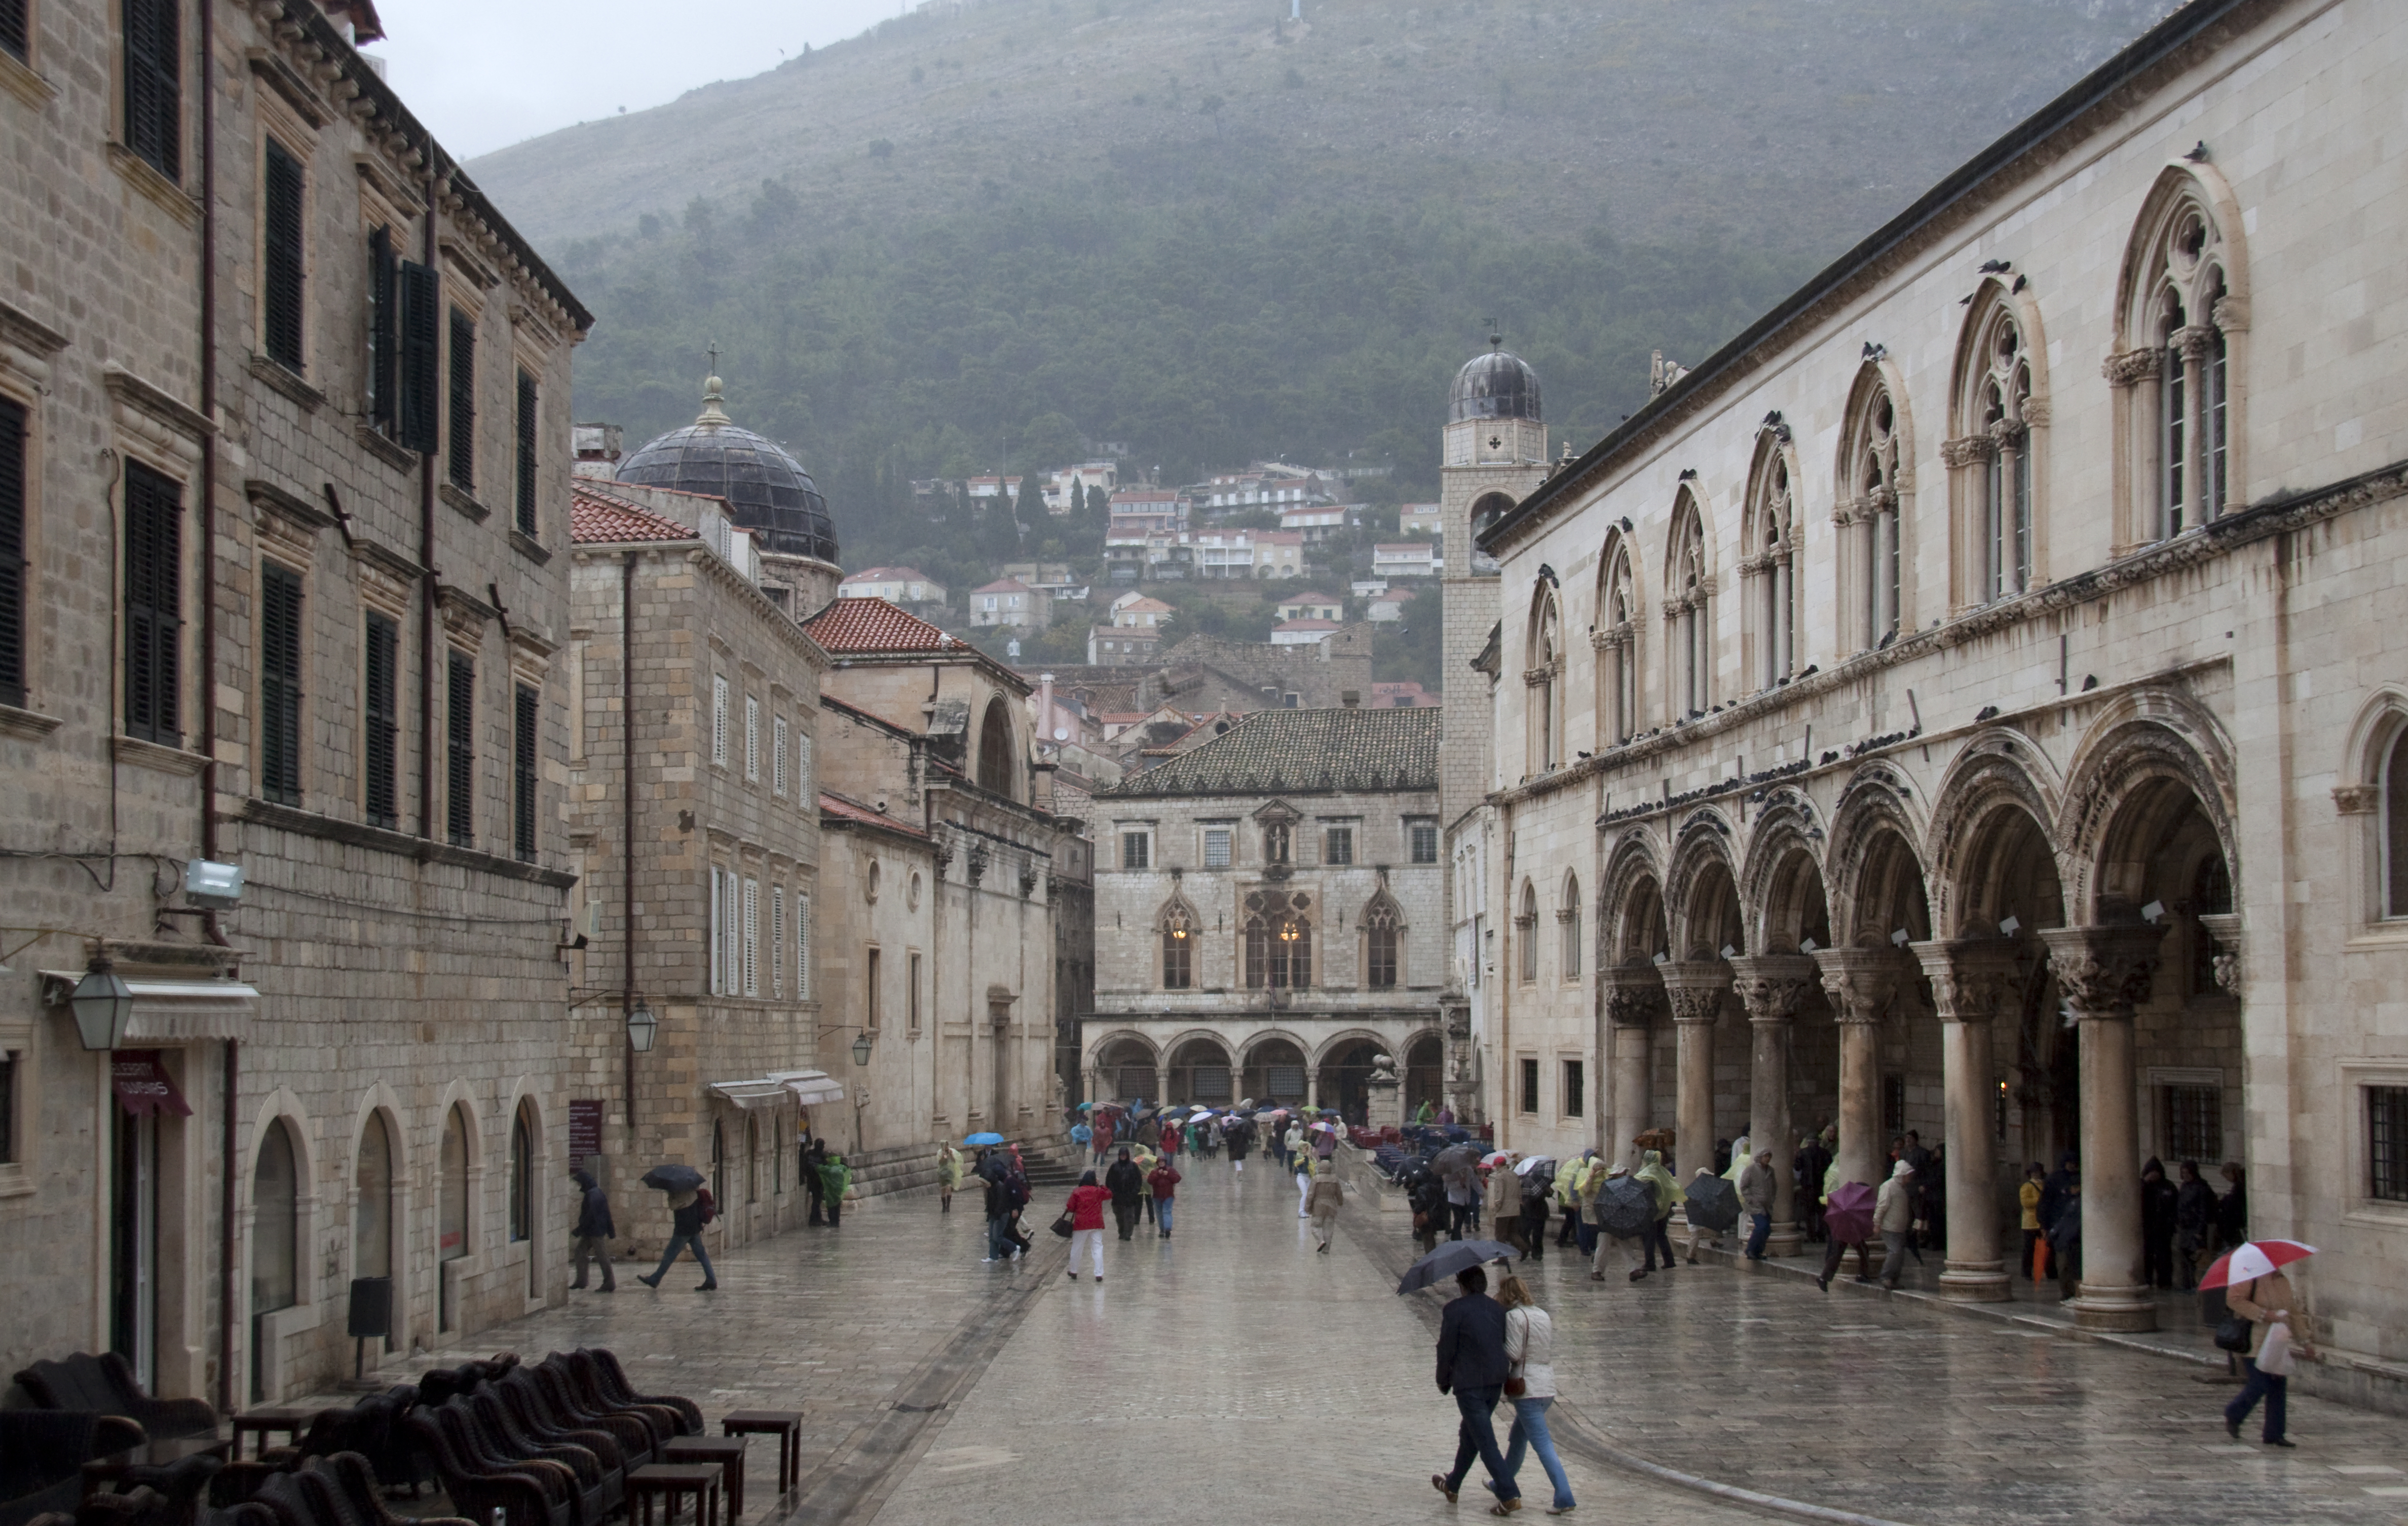 Pred_Dvorom_Old_Town_Dubrovnik_(4058285865).jpg